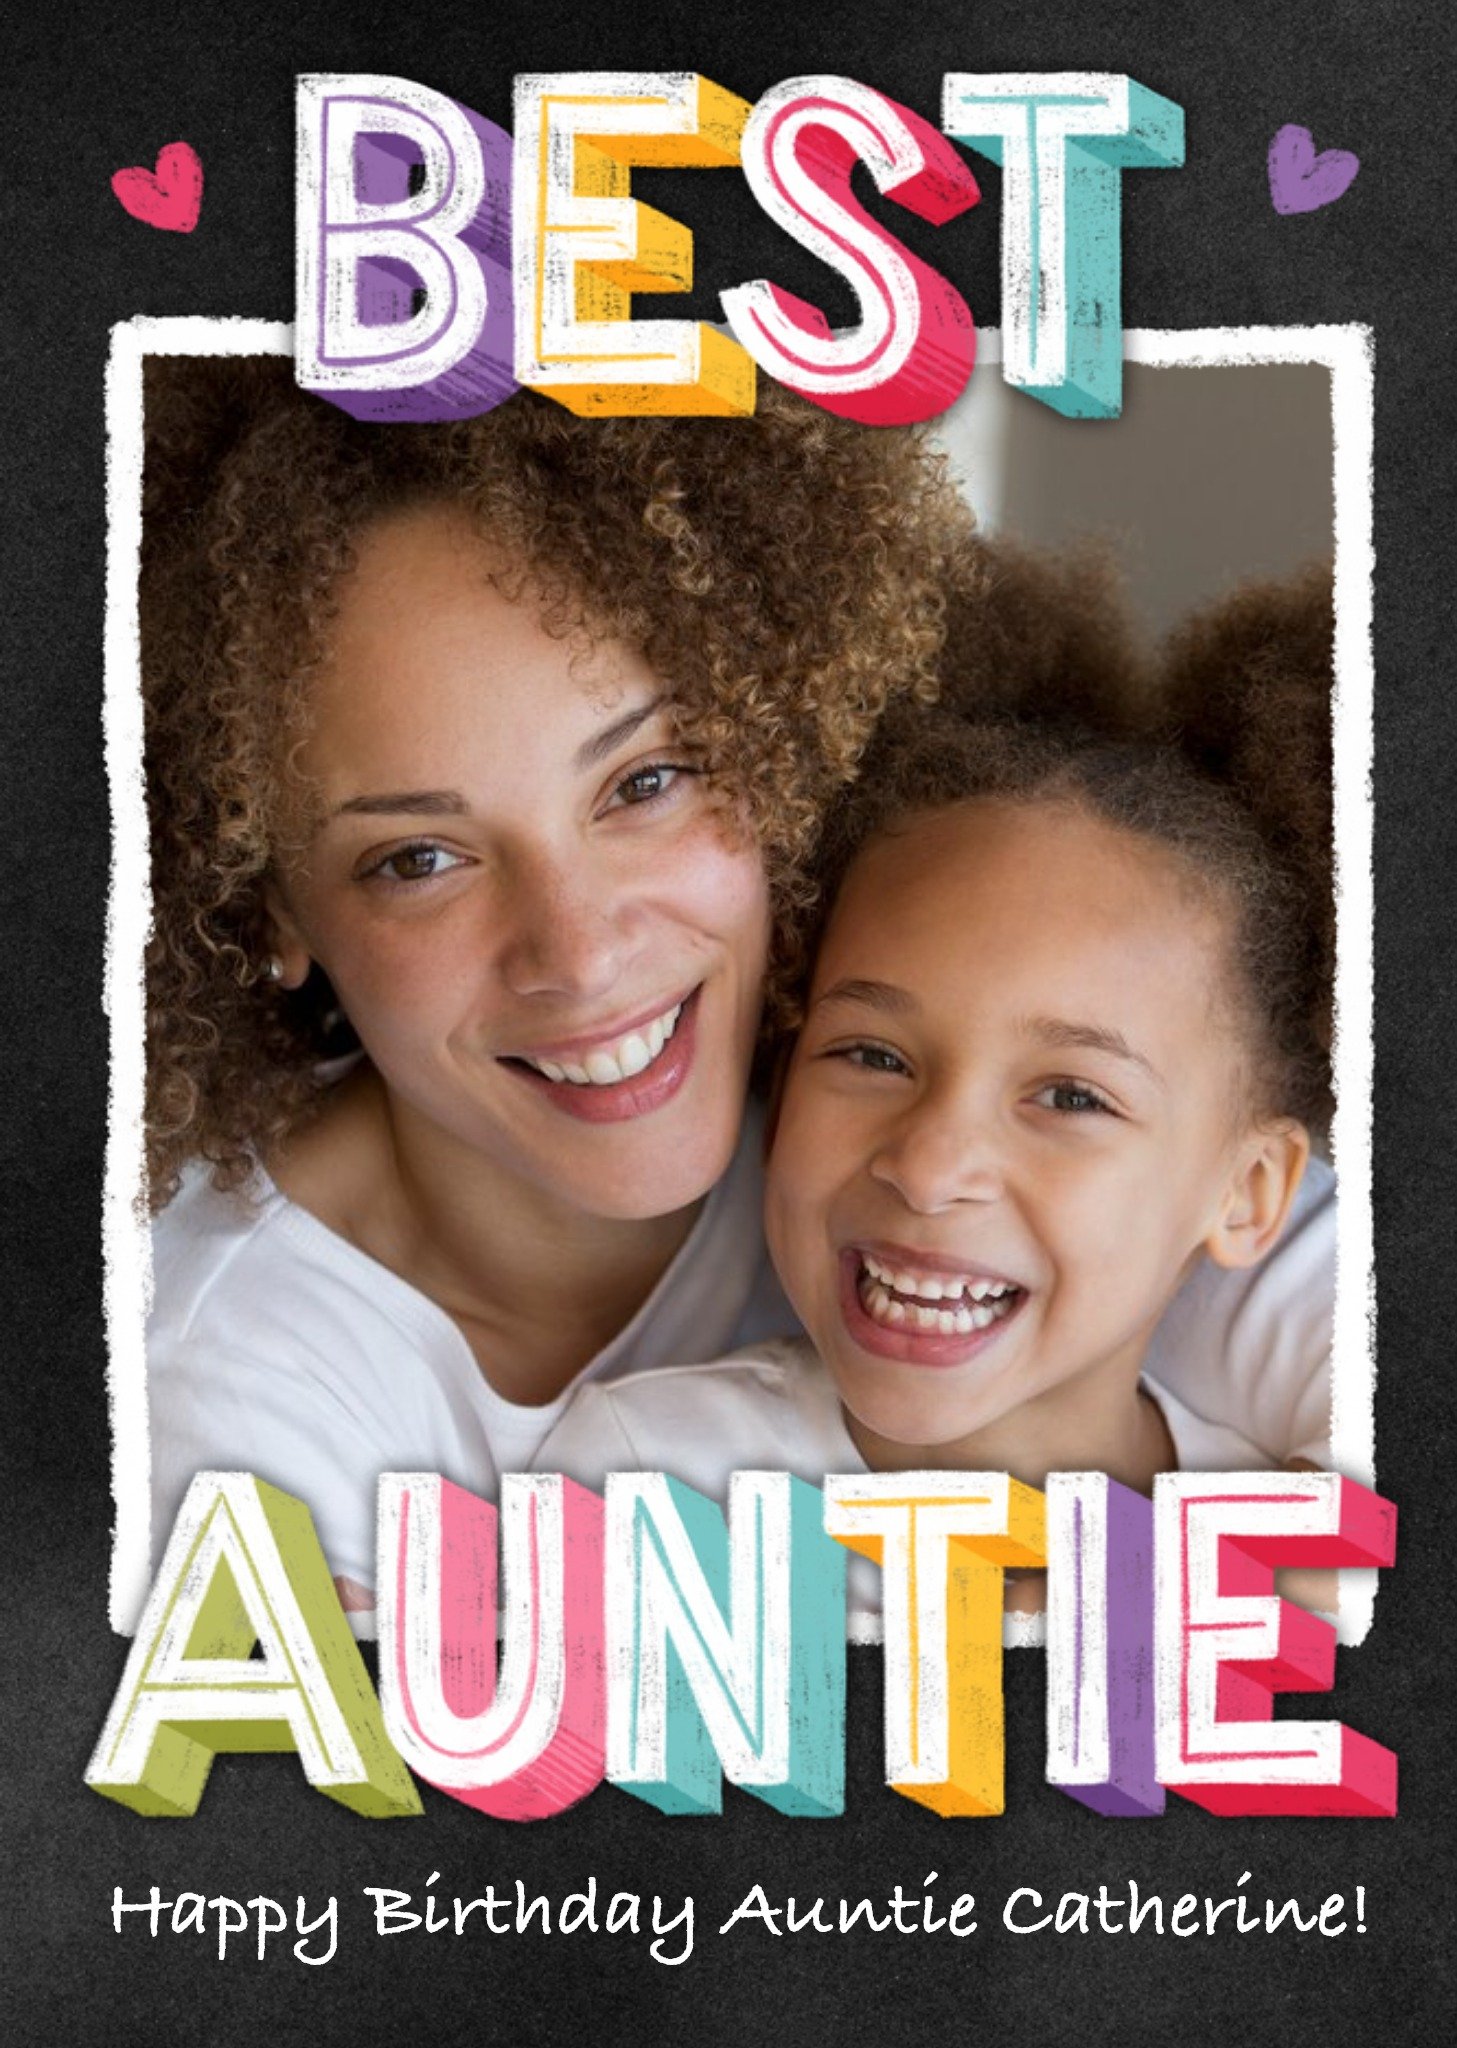 Moonpig Best Auntie Birthday Card - Chalk Lettering - Photo Upload Ecard